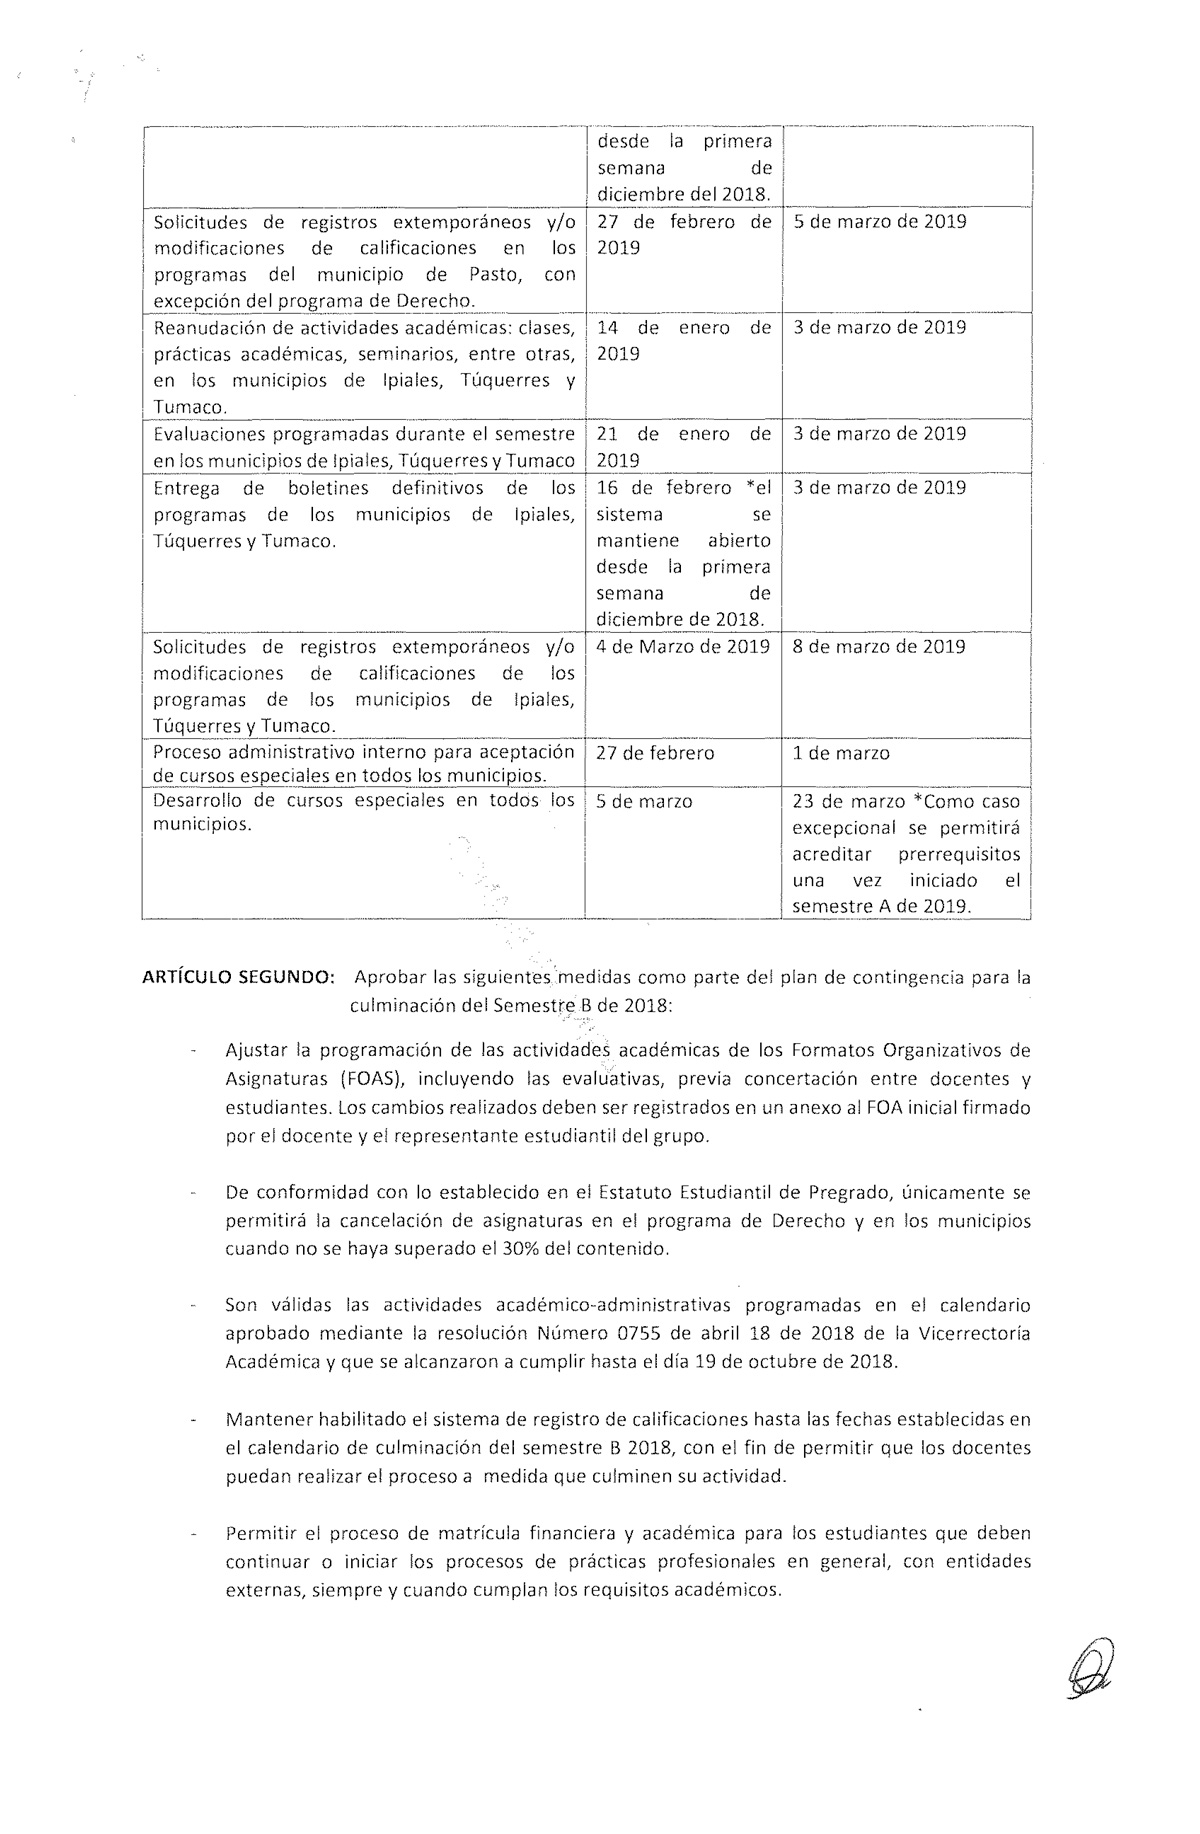 https://periodico.udenar.edu.co/wp-content/uploads/2019/01/acuerdo-reiniciacion-semestre-2.jpg